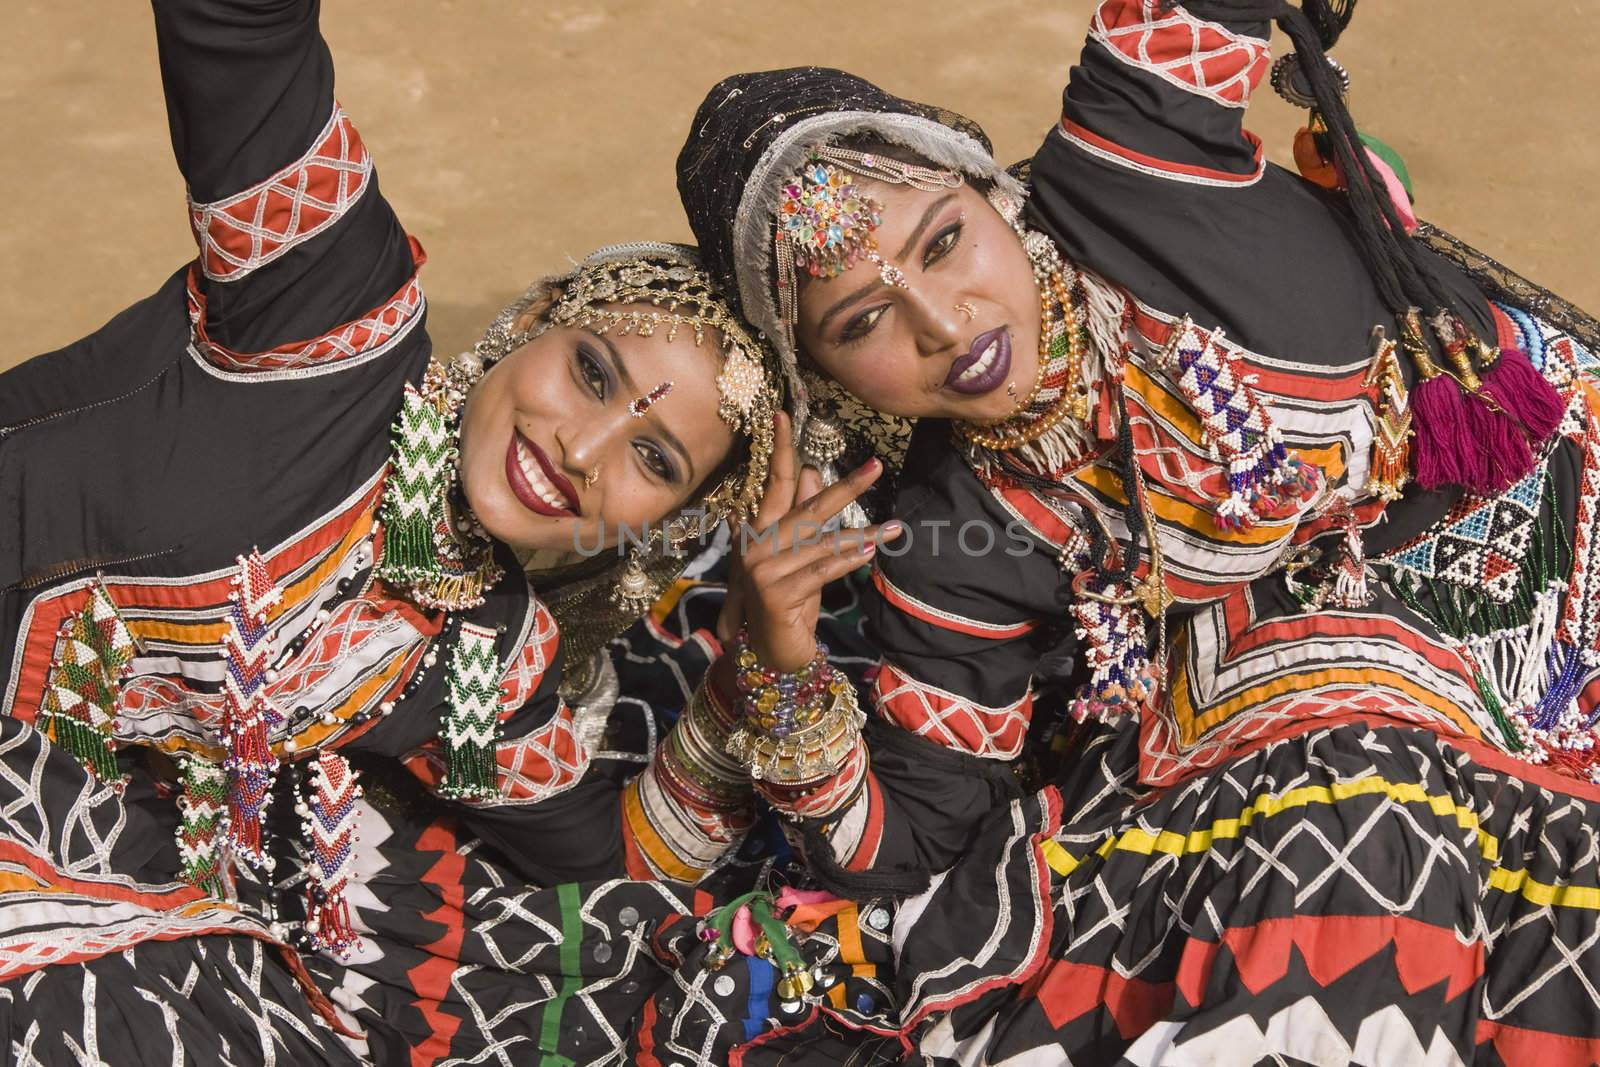 Dancing Girls of Rajasthan by JeremyRichards